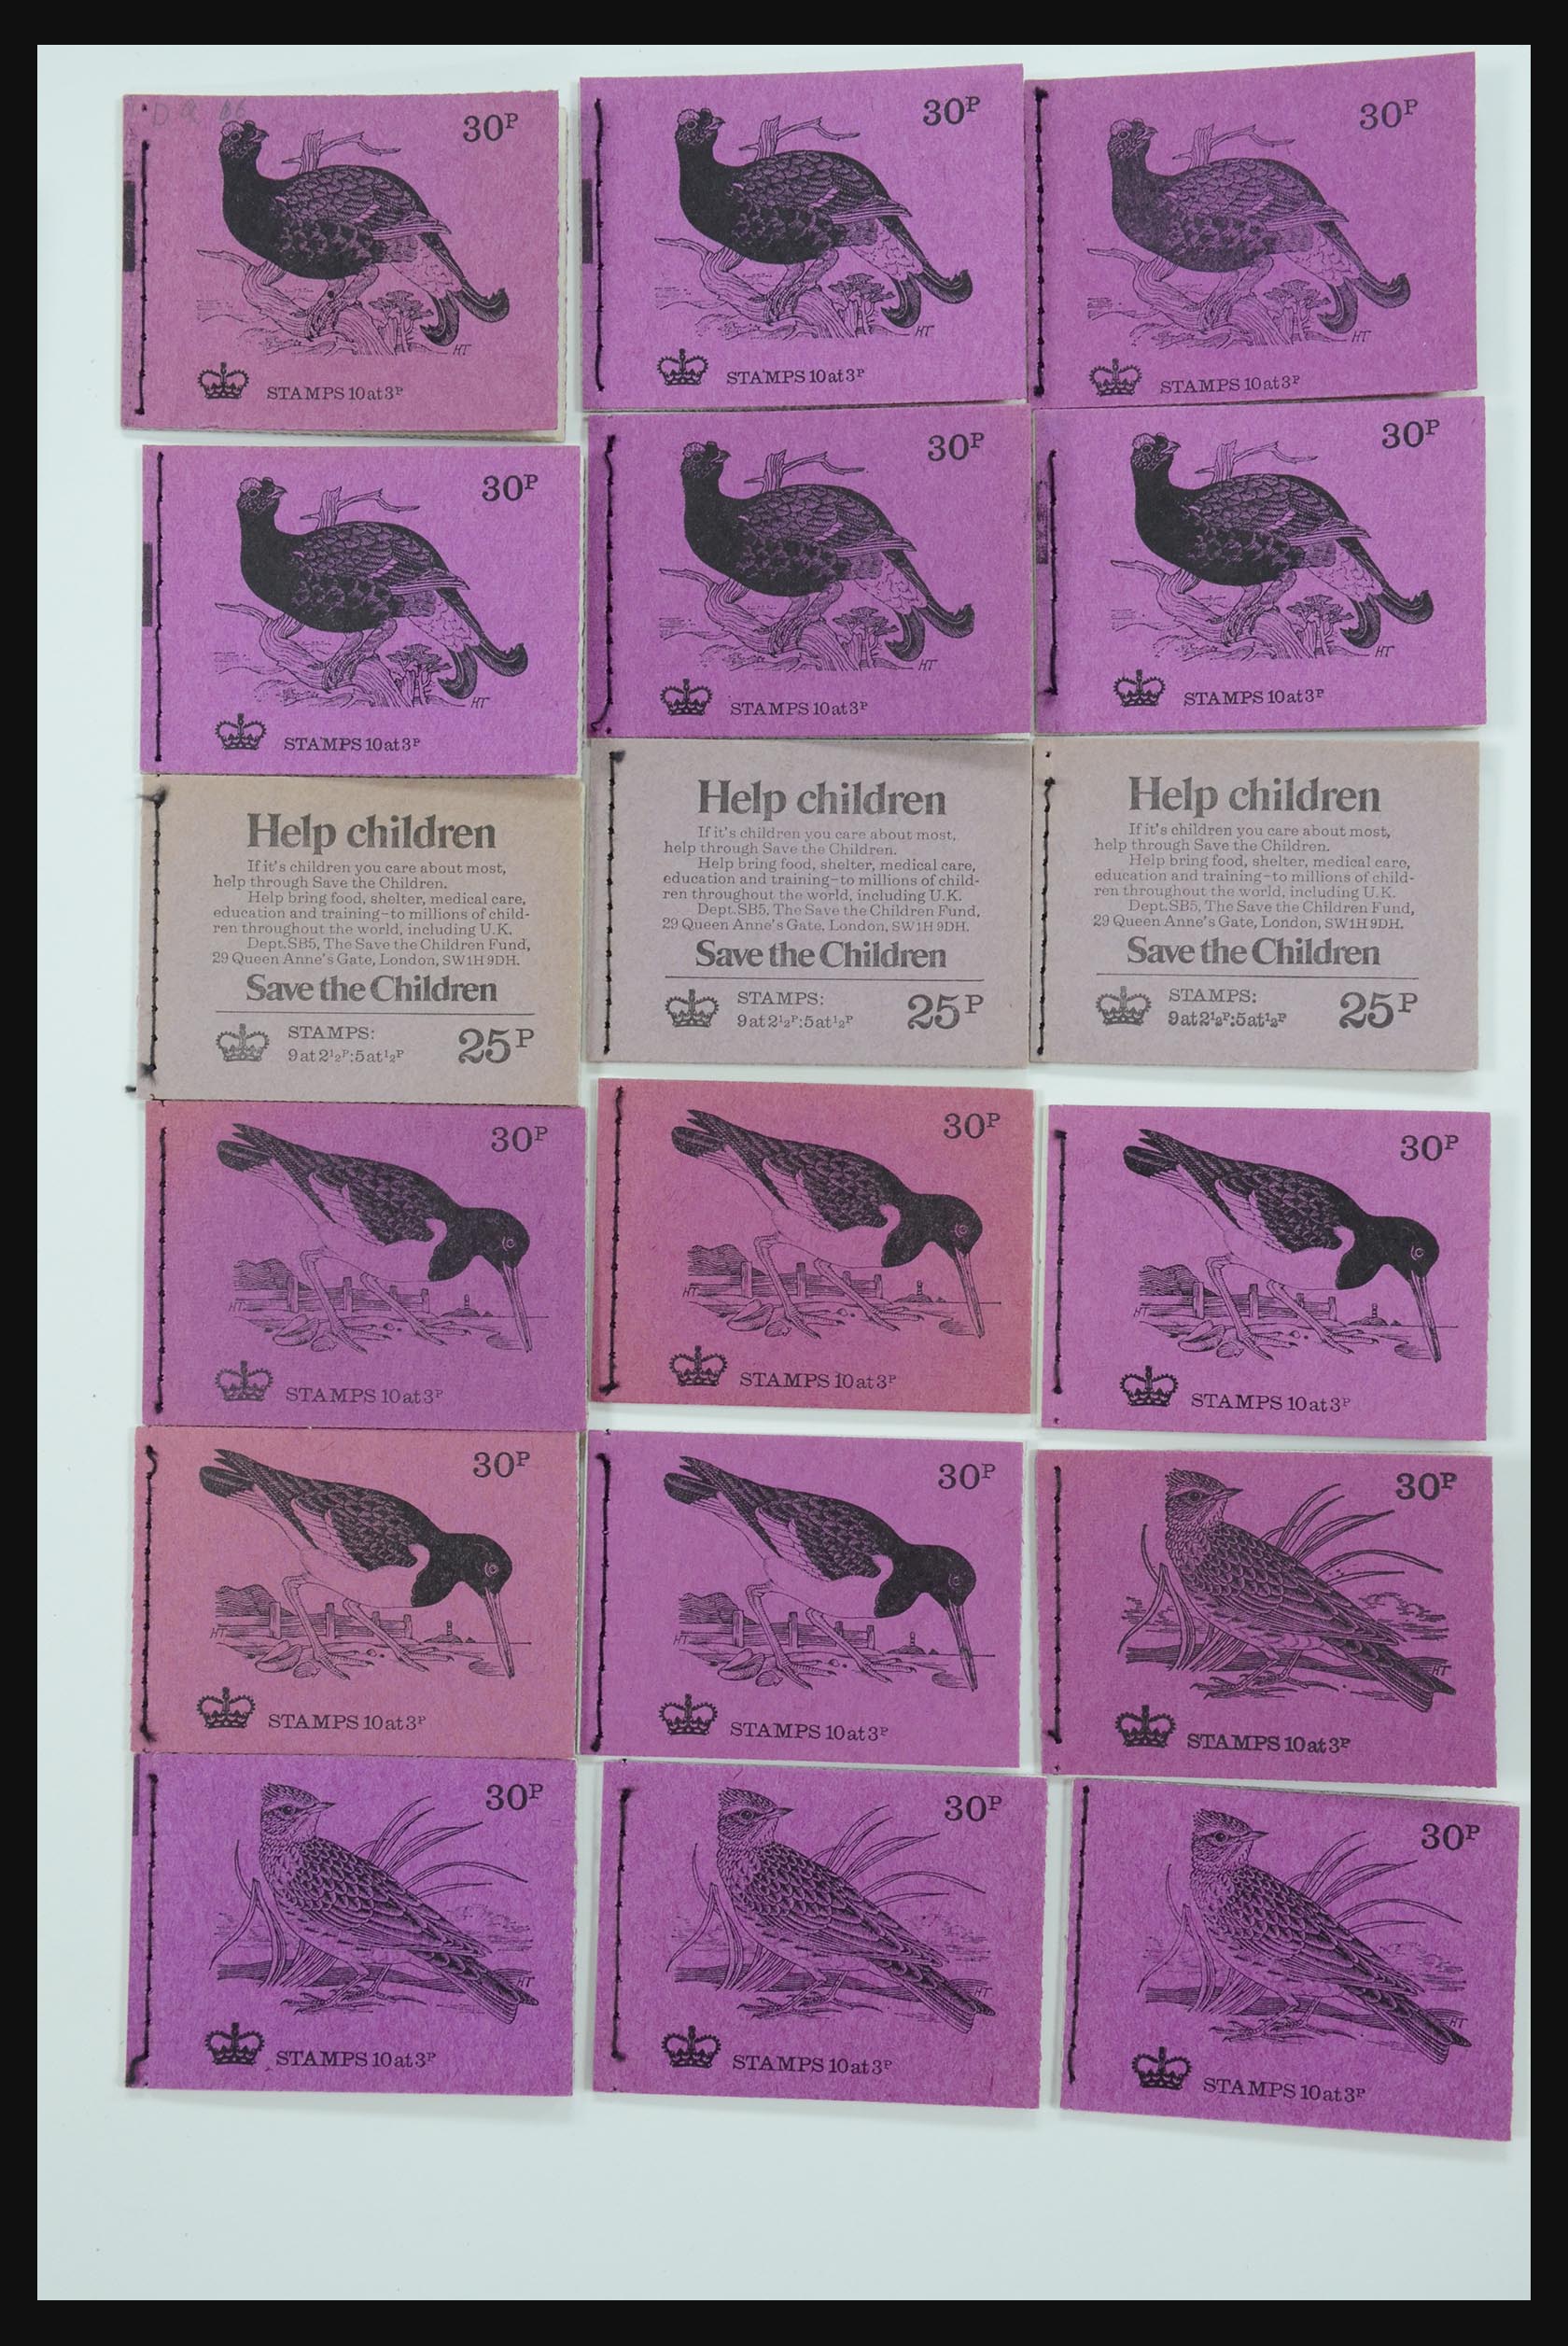 31961 016 - 31961 Great Britain stampbooklets 1971-1999.